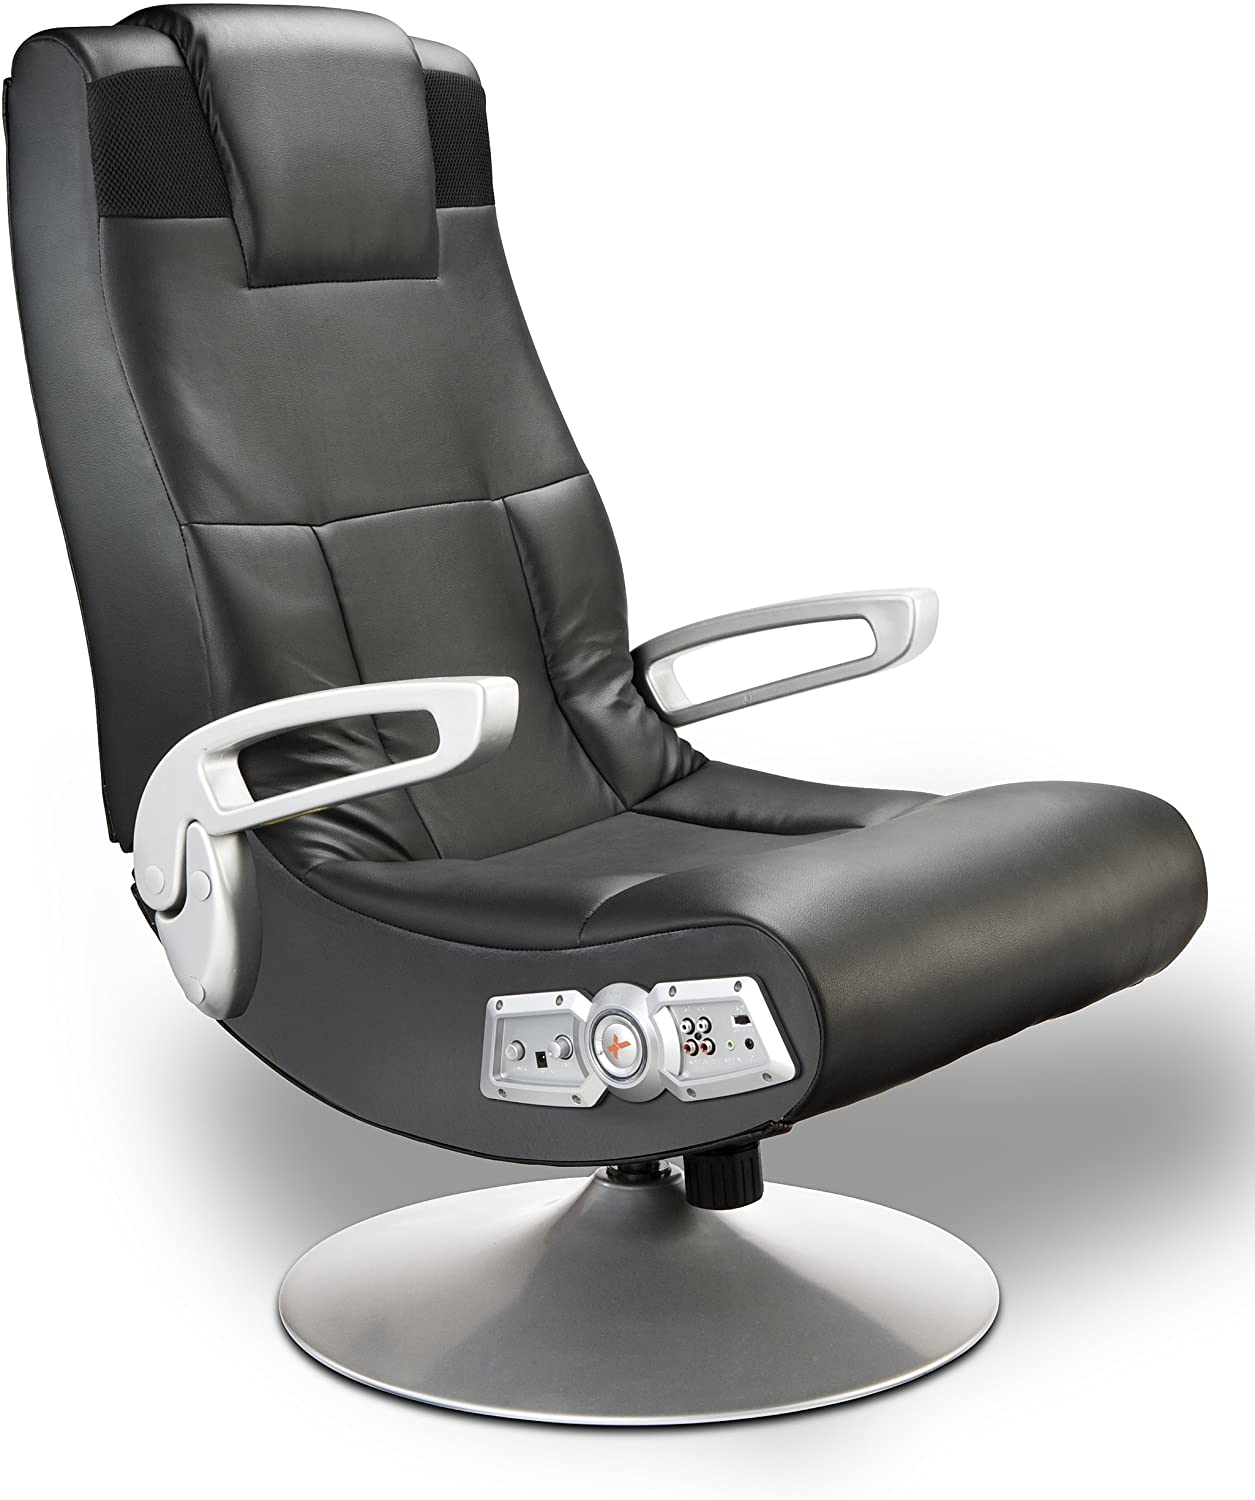 Flight Sim Gaming Chair